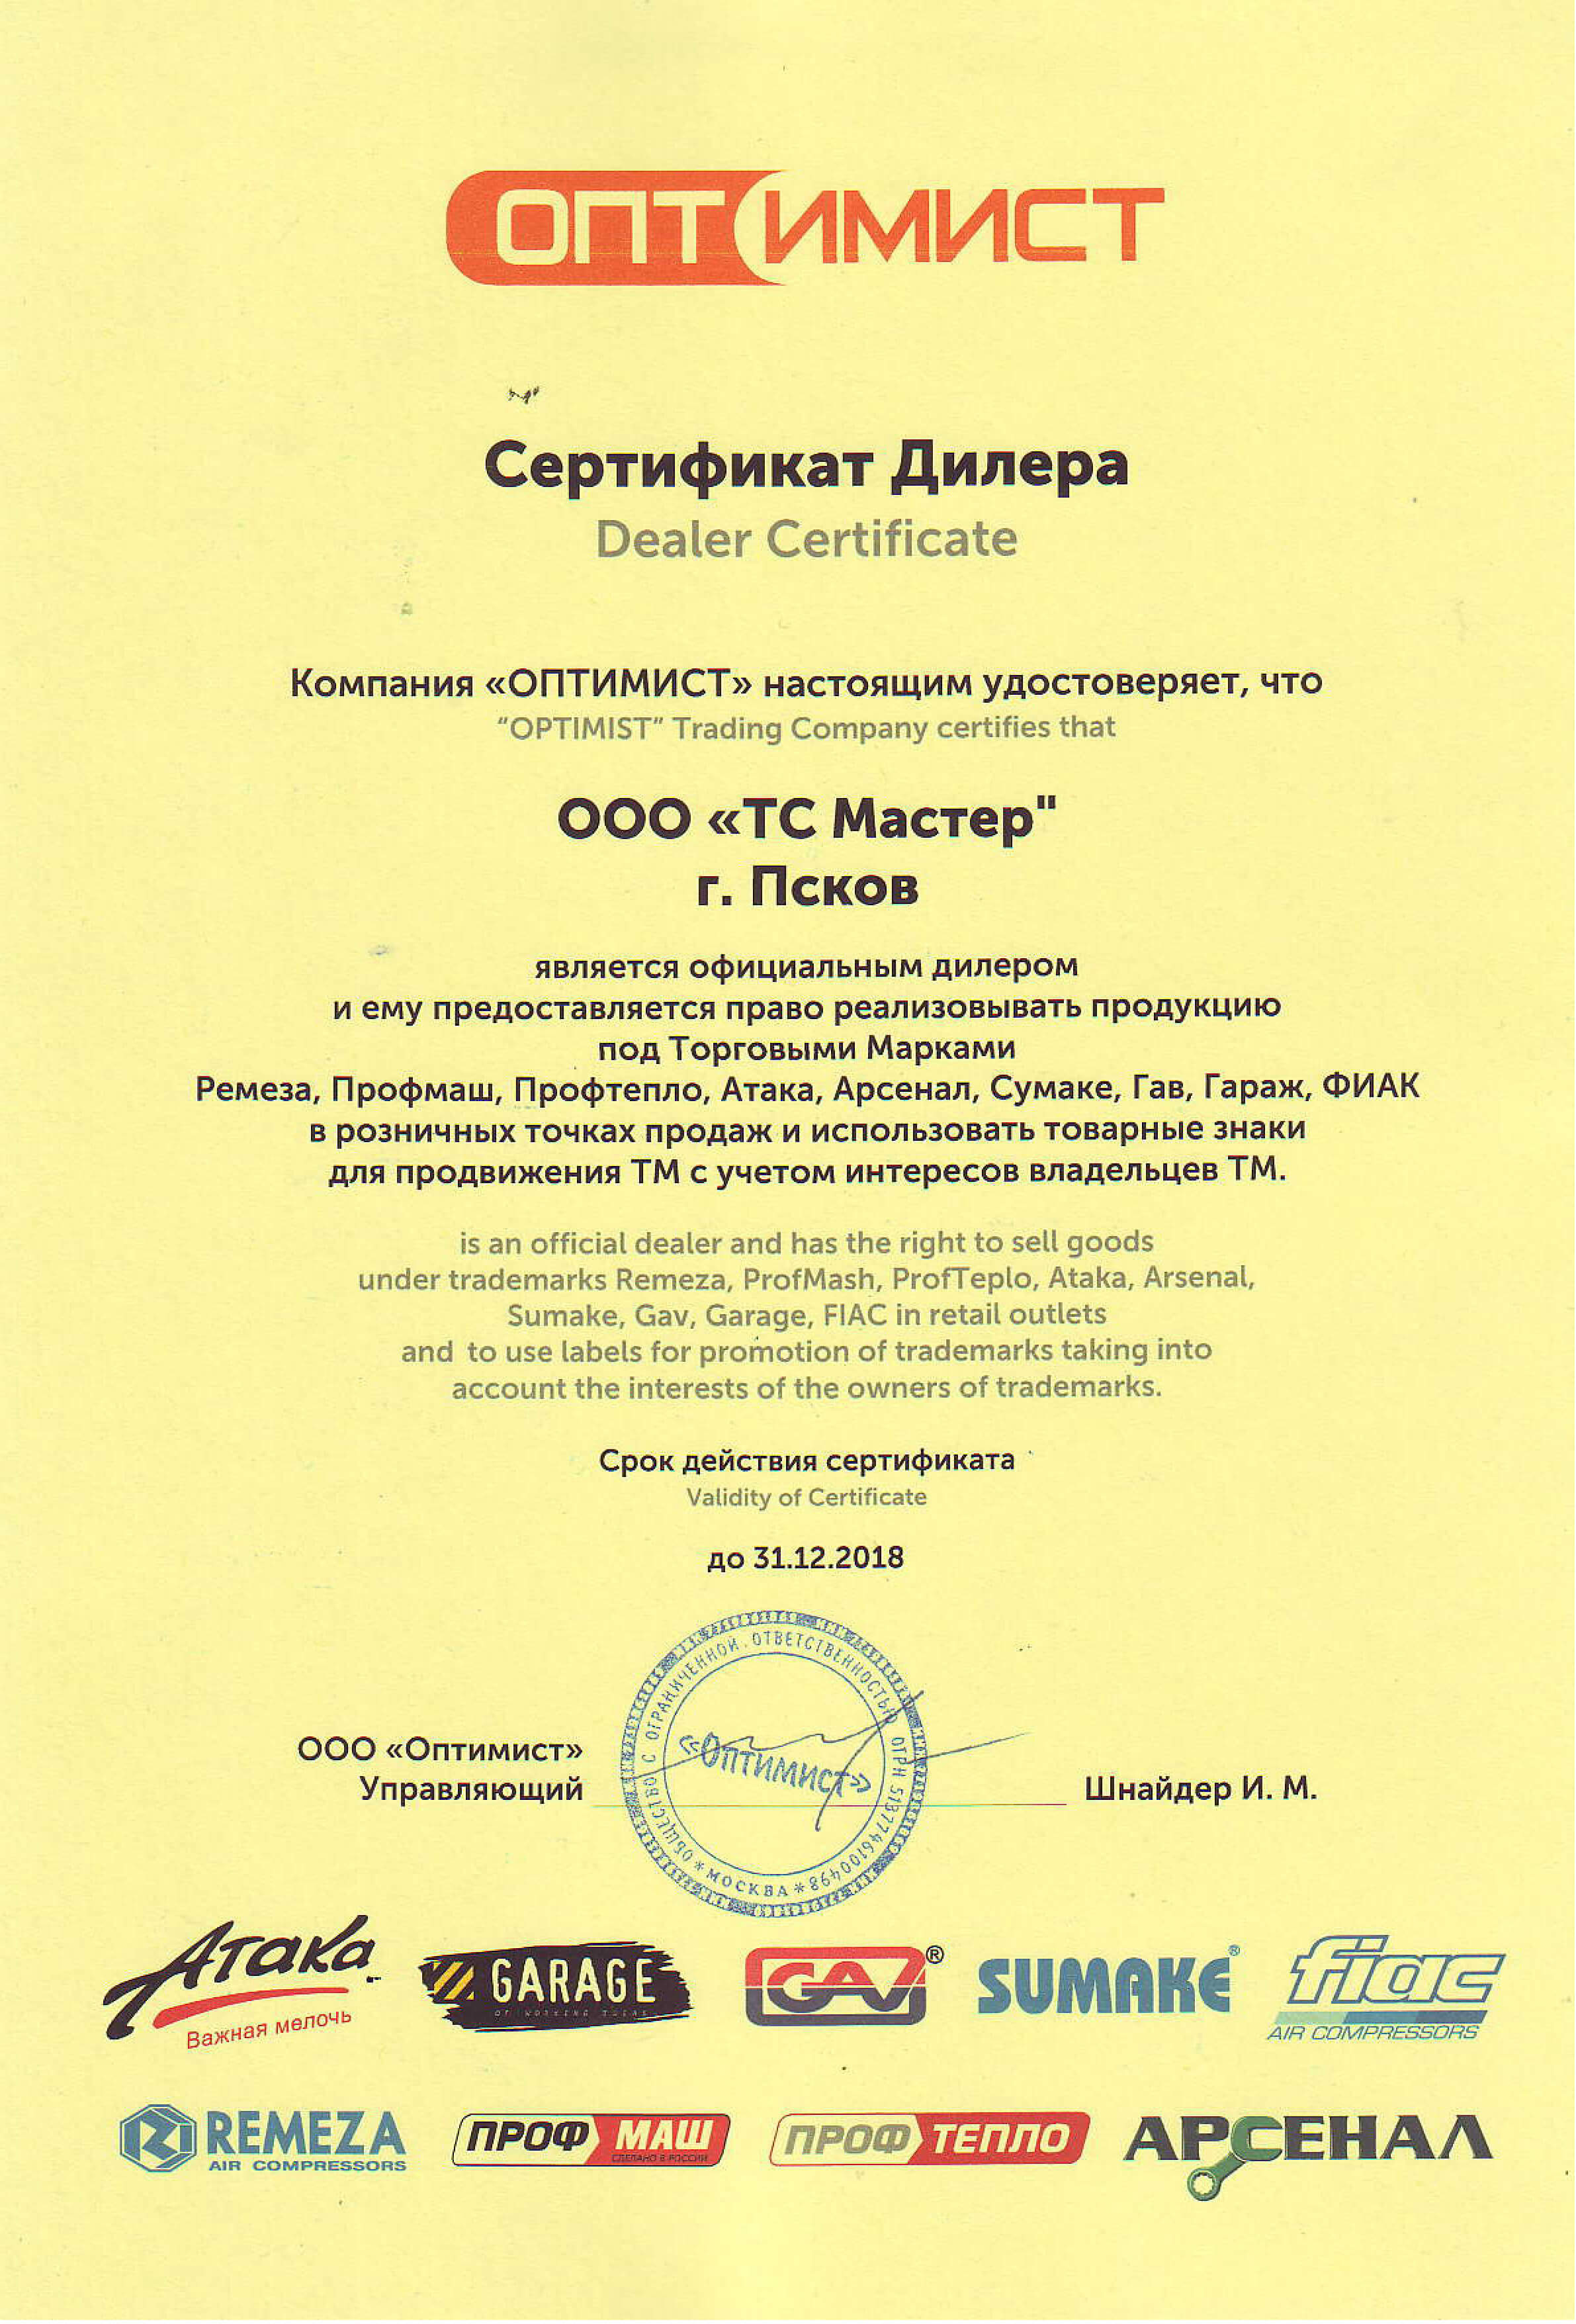 Сертификат дилера ItzVmC5O03QnLJHO6cnWZJo7ld7o3pAh.jpg